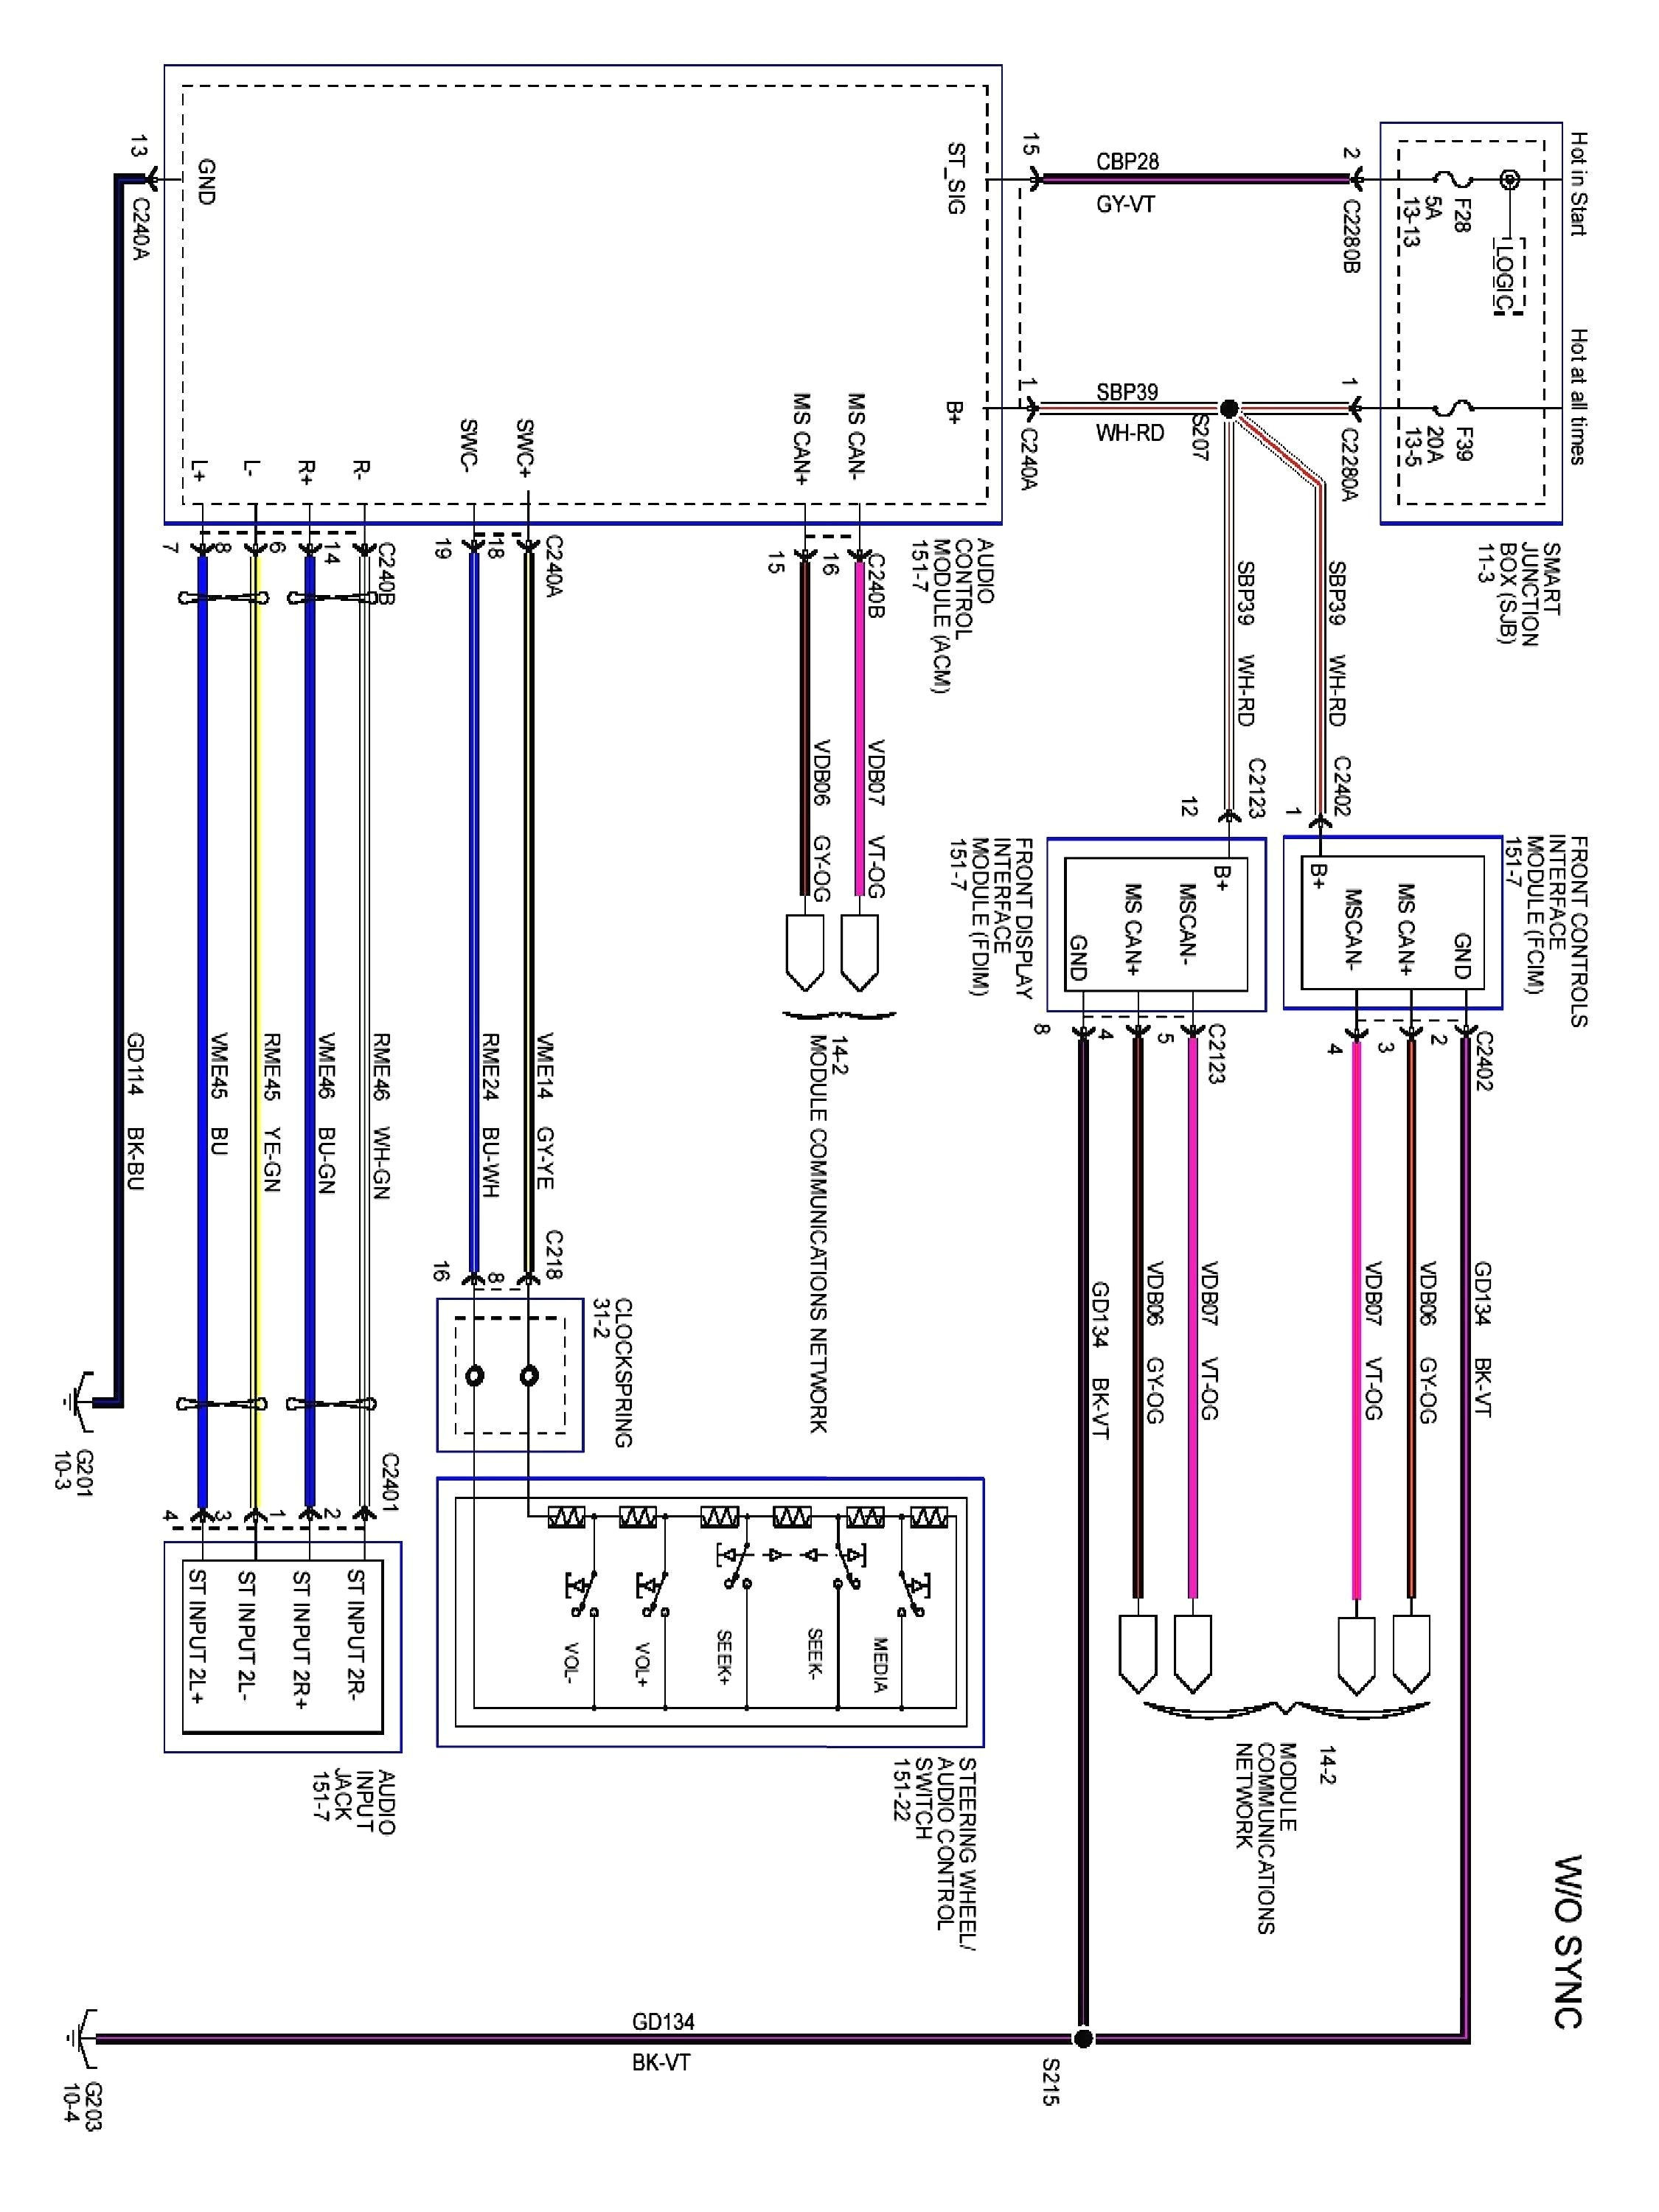 2001 bmw wiring diagrams wiring diagram hopkins wiring diagram bmw x5